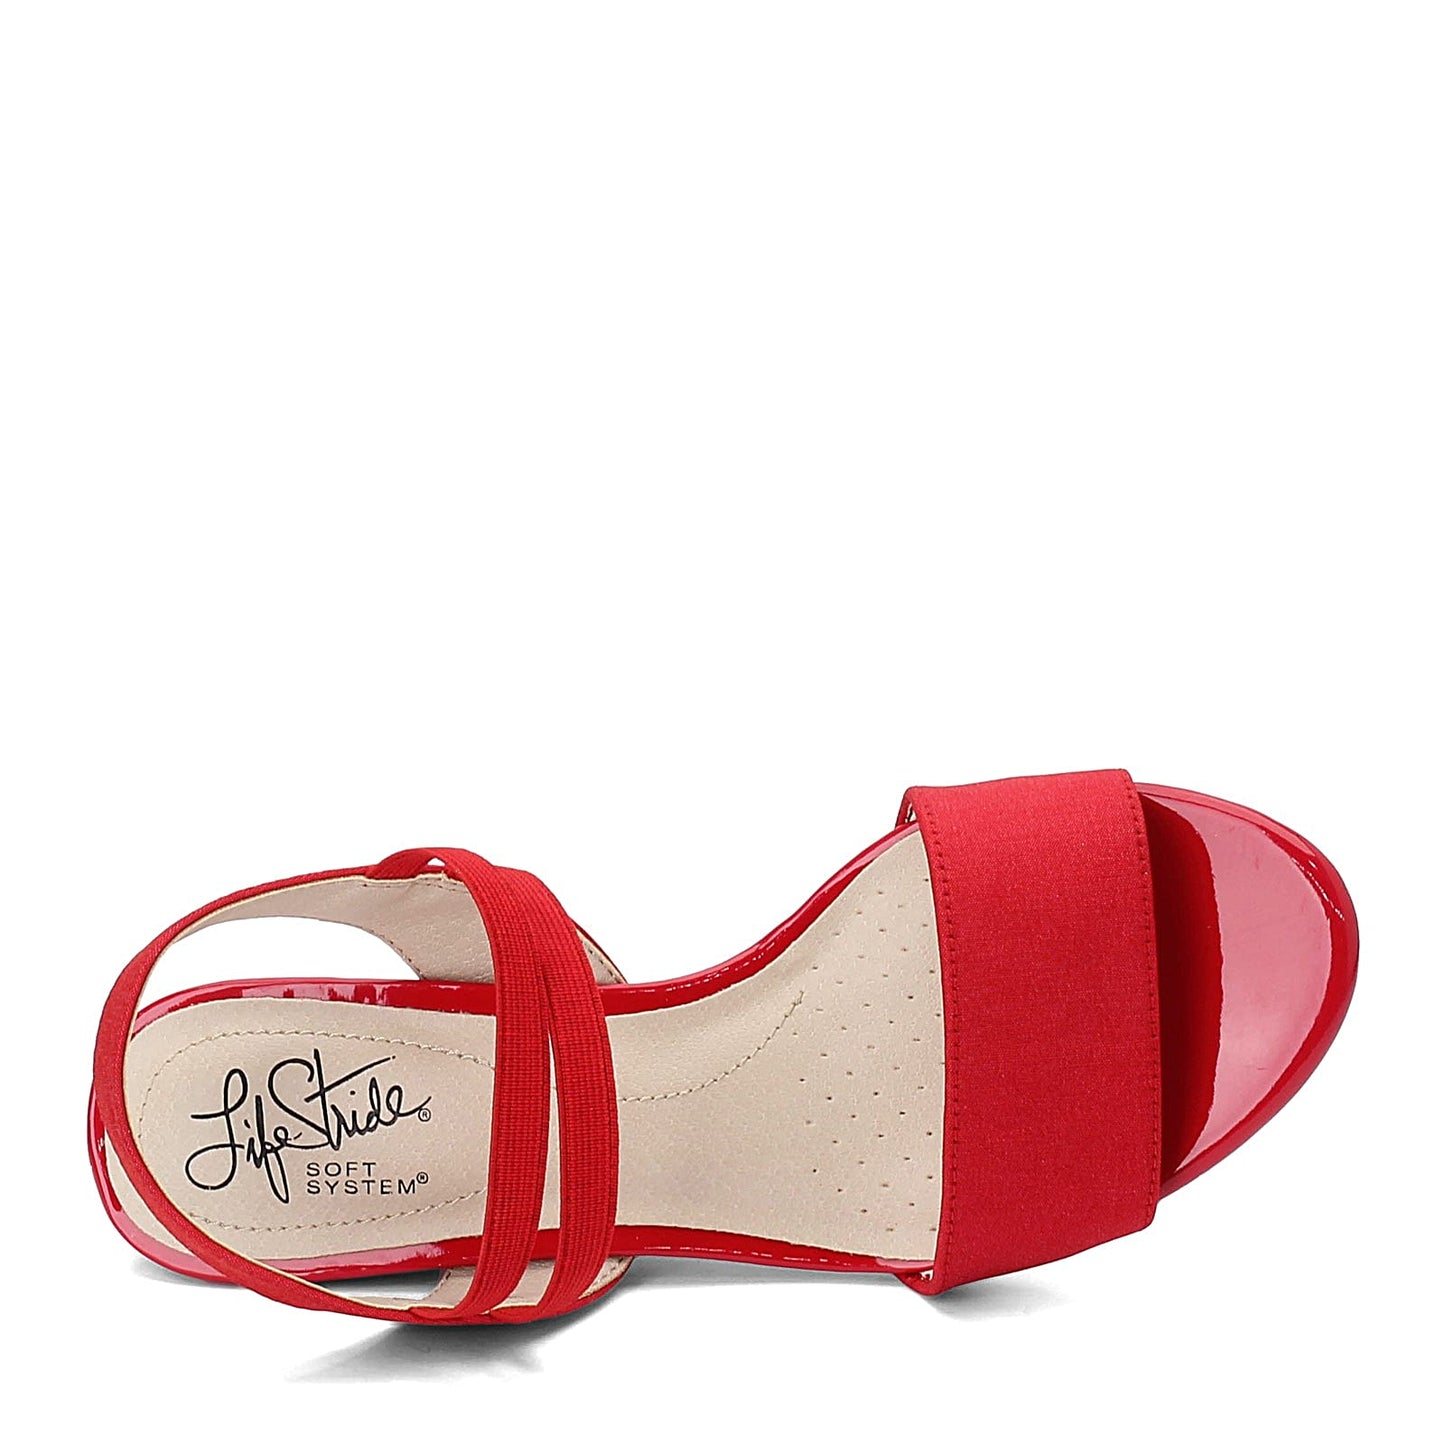 Peltz Shoes  Women's Lifestride Yolo Sandal